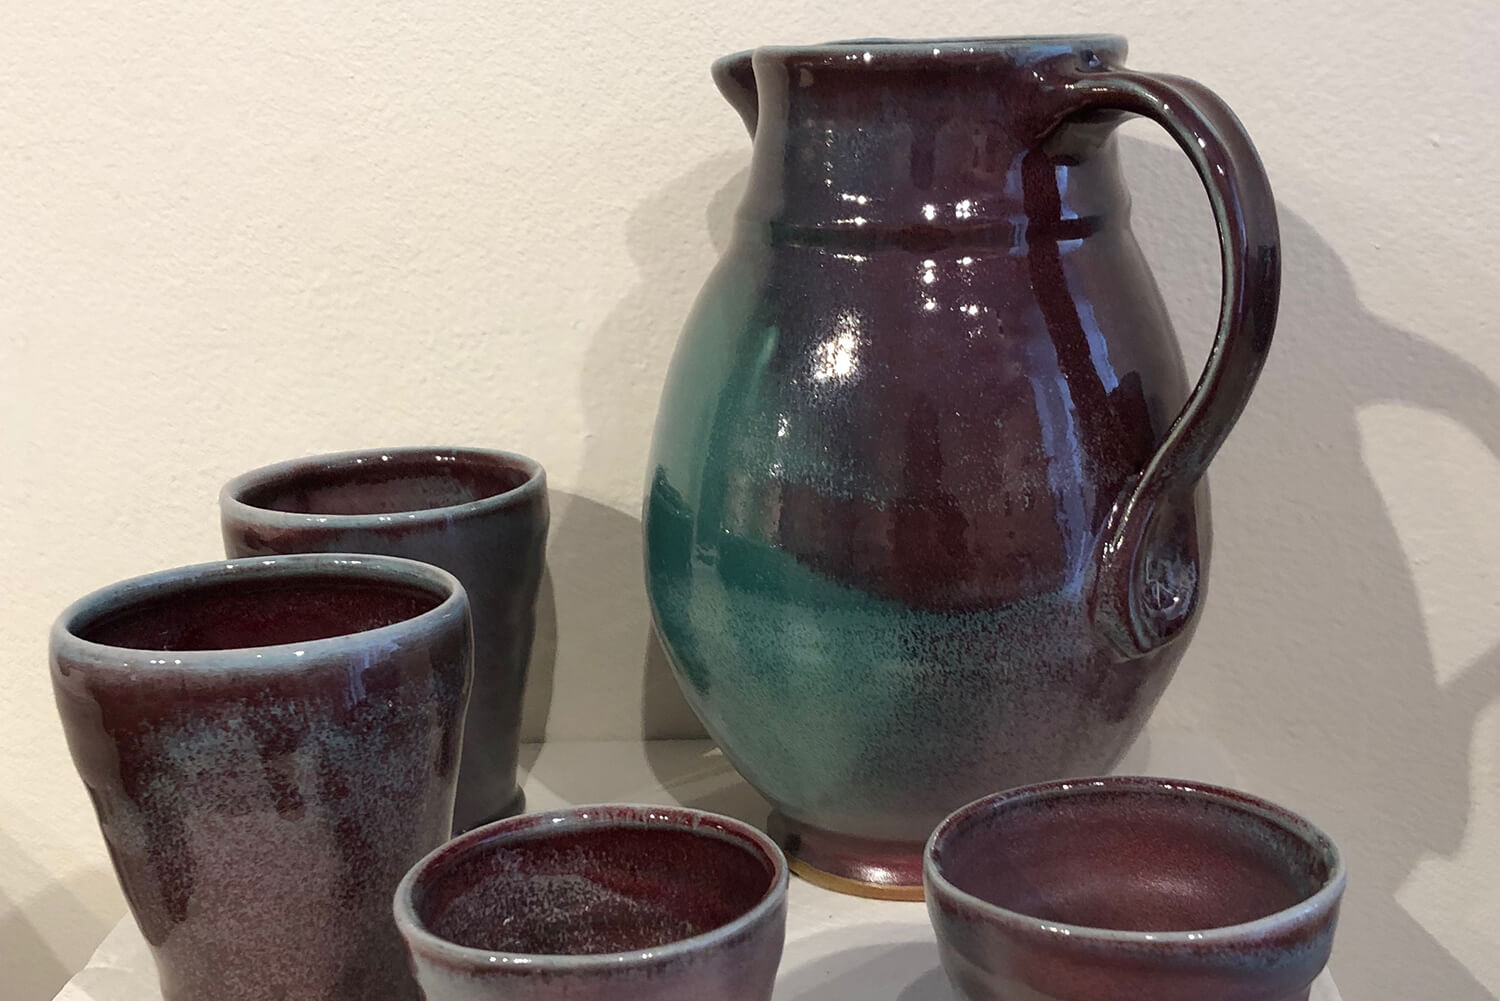 Ceramics created by alumni, students, and a professor of the UOG fine arts program